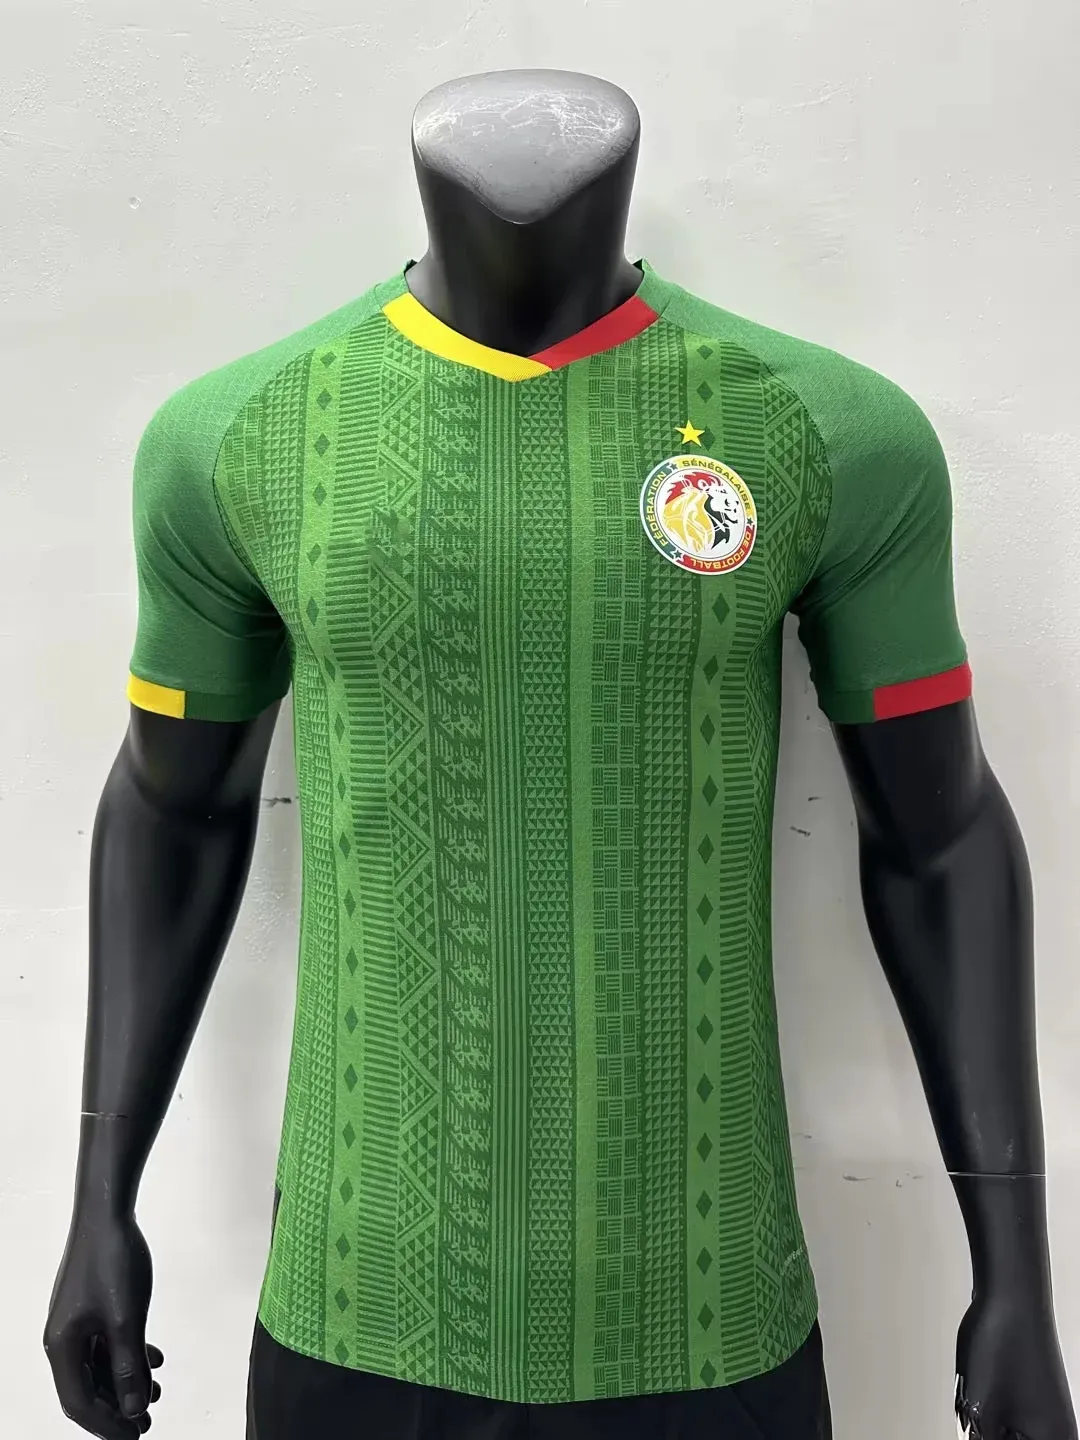 Senegal national team retro jerseys